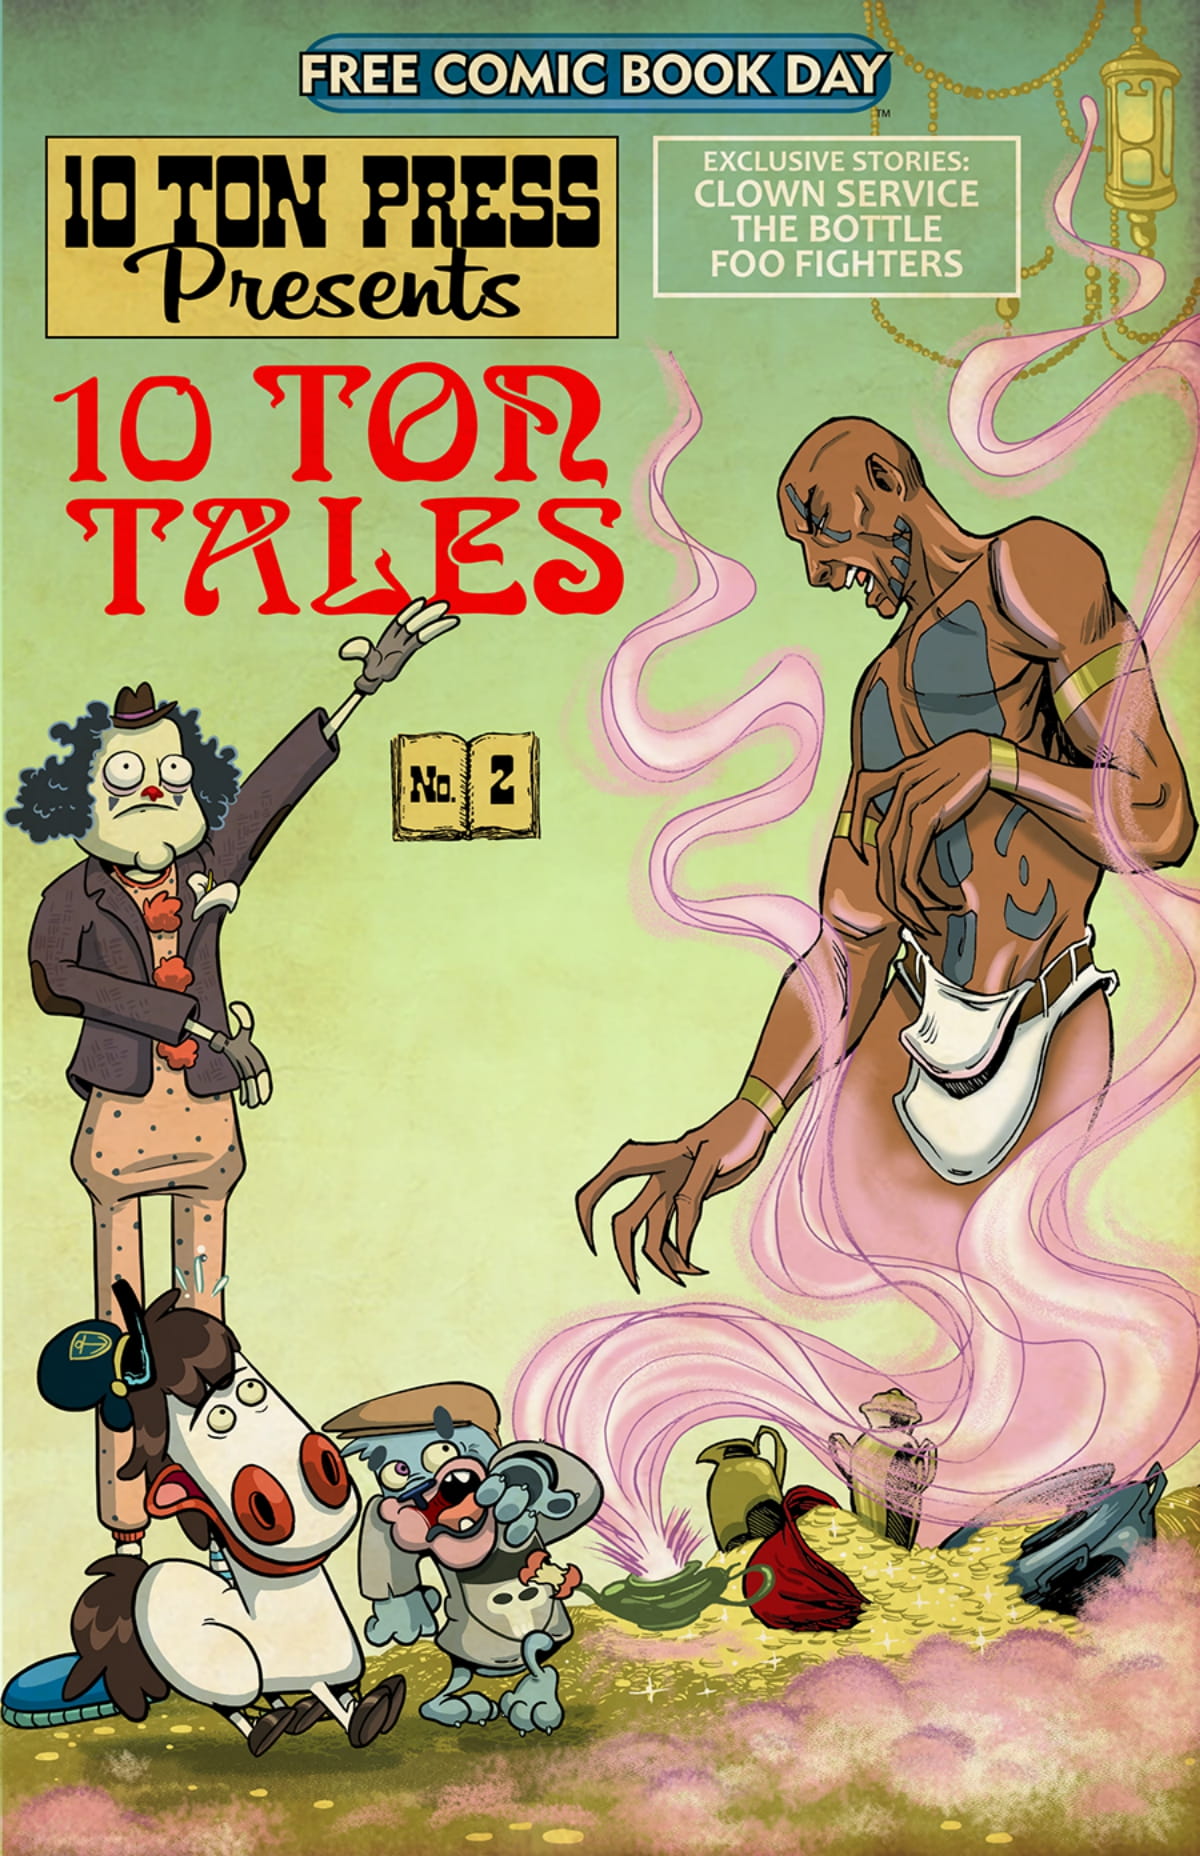 Free Comic Book Day, FCBD,10 Ton Press, 10 Ton Tales 